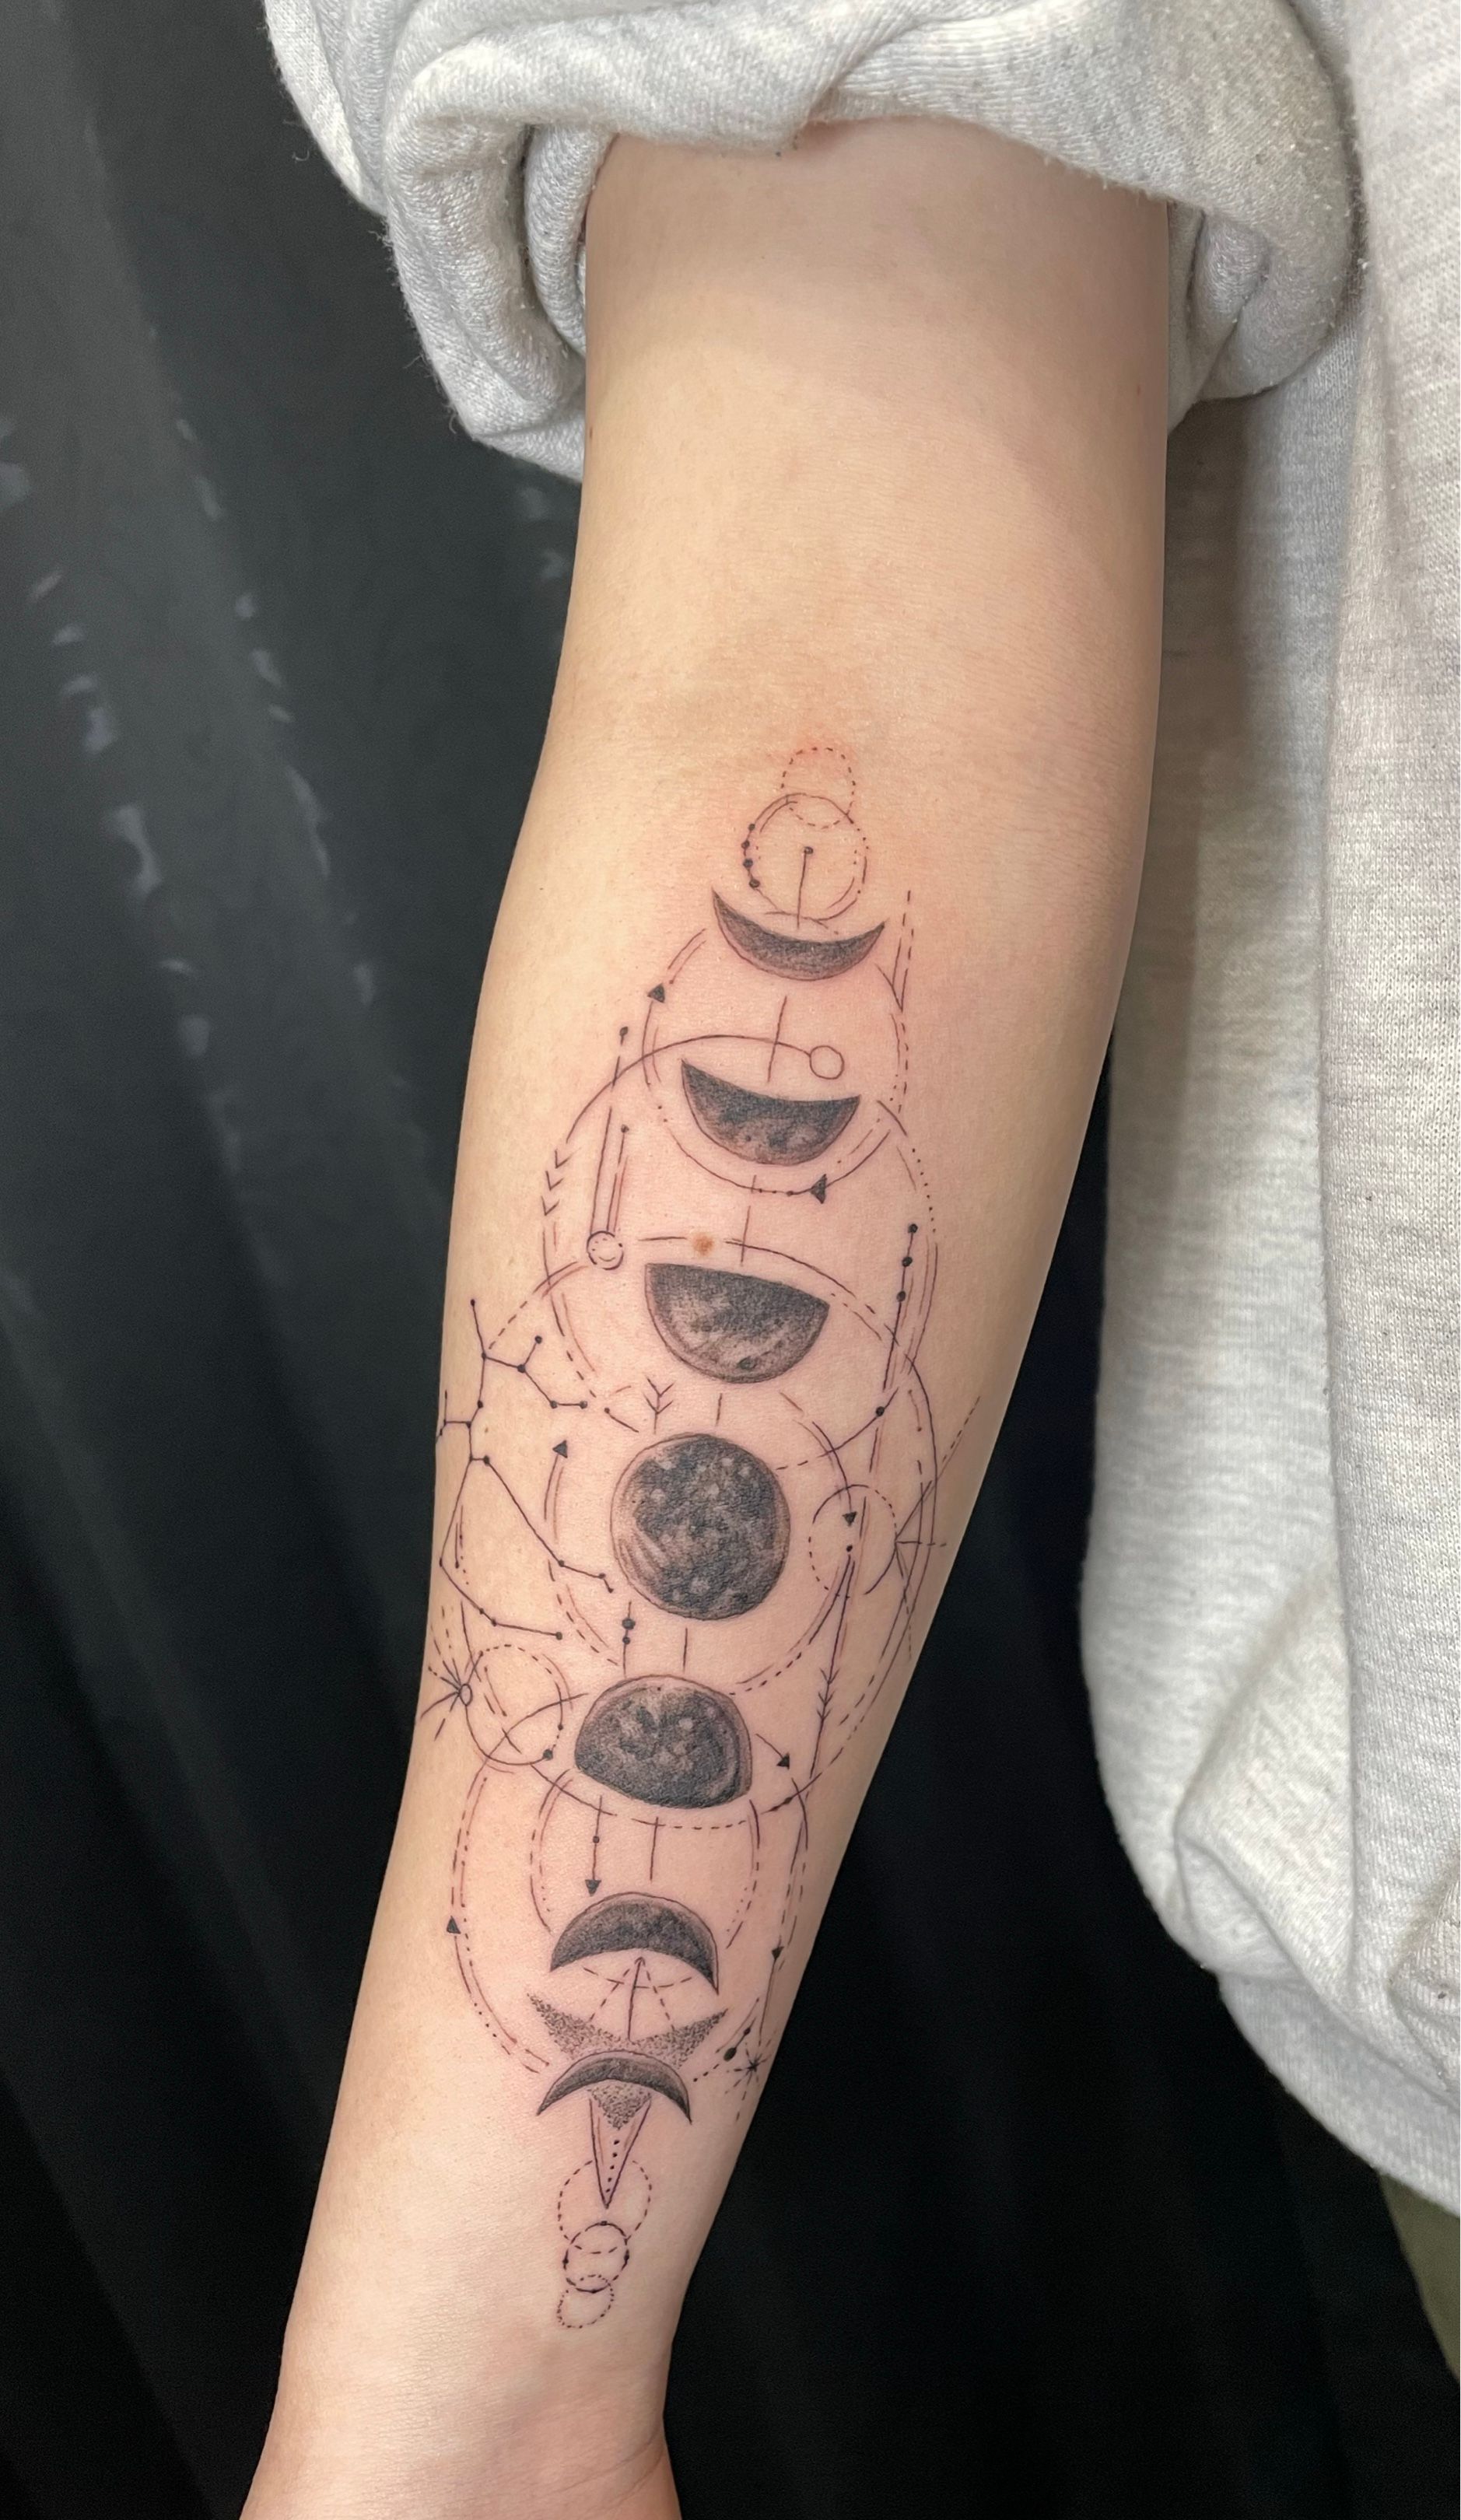 Doraemon tattoo on the left inner arm. | Tatuajes bonitos pequeños,  Tatuajes molones, Tatuaje diminuto